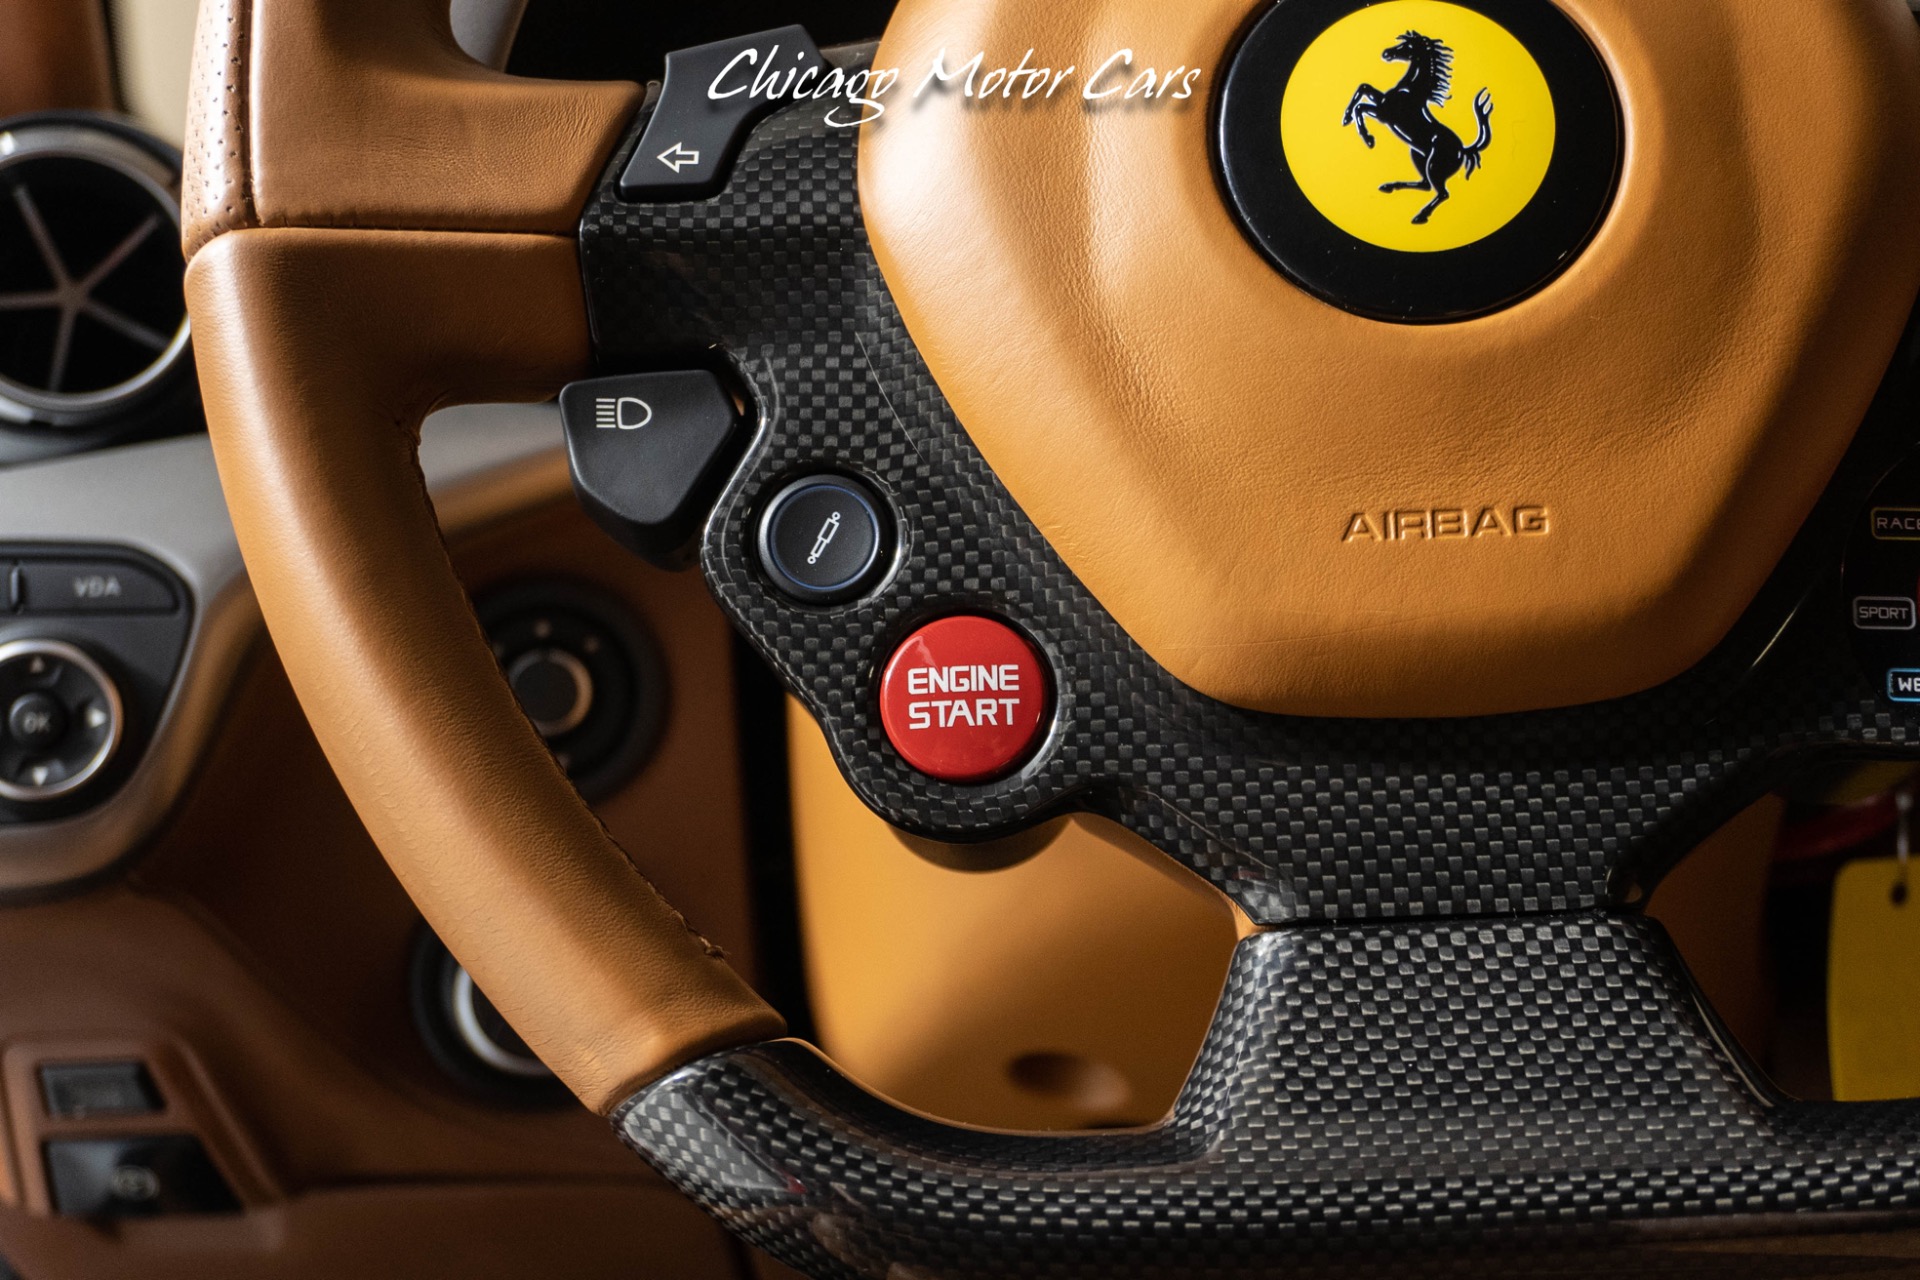 Used-2017-Ferrari-F12-berlinetta-NOVITEC-WHEELS---SPRINGS-Carbon-Fiber-HIGHLY-DESIRED-FACTORY-OPTIONS